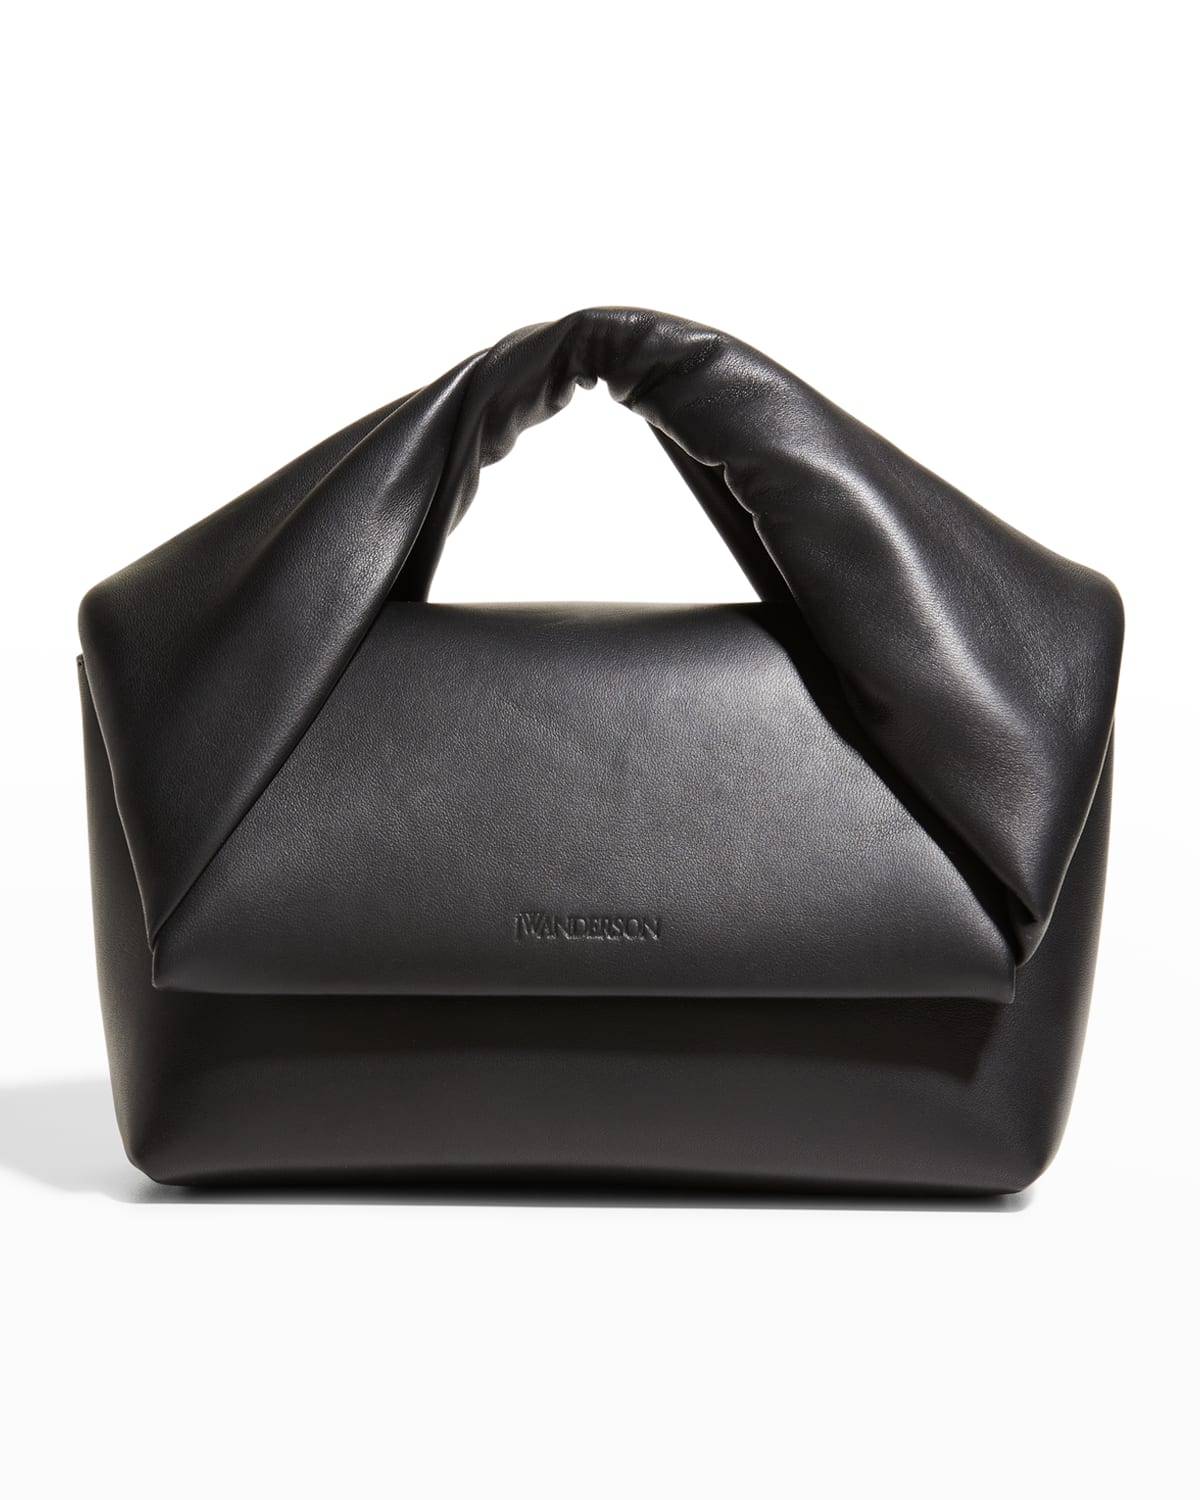 JW ANDERSON Medium Twister - Leather Top Handle Bag equaljustice